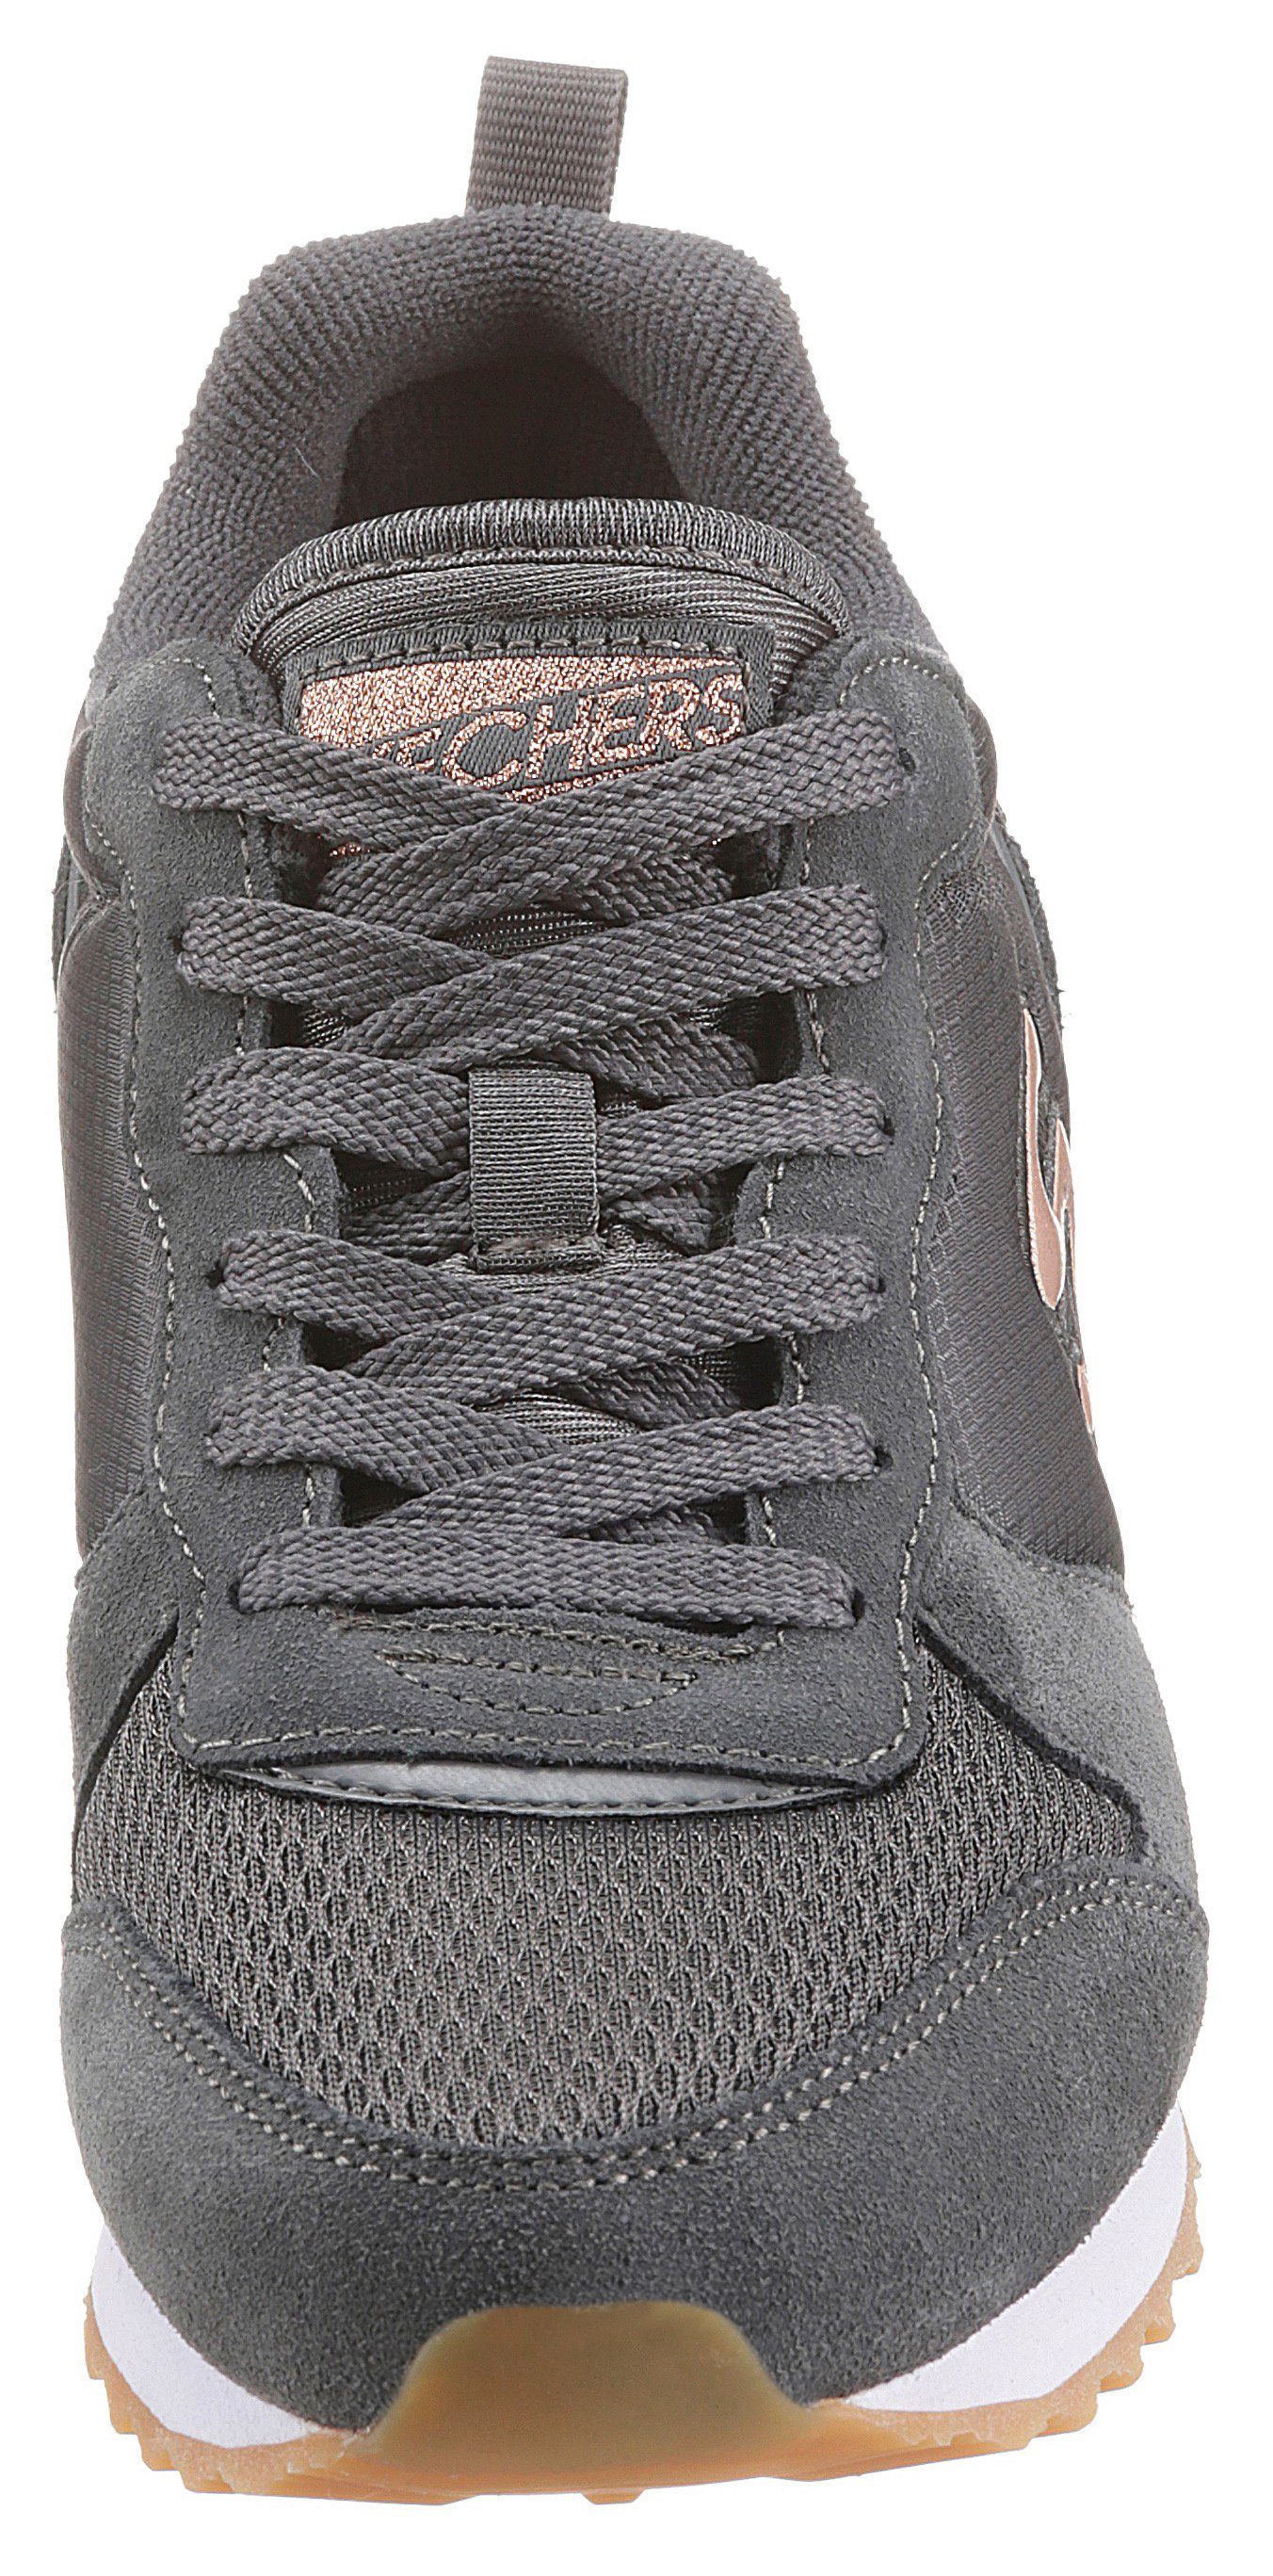 Memory - GURL Sneaker mit OG Foam komfortabler Ausstattung 85 Air-Cooled grau GOLDN Skechers